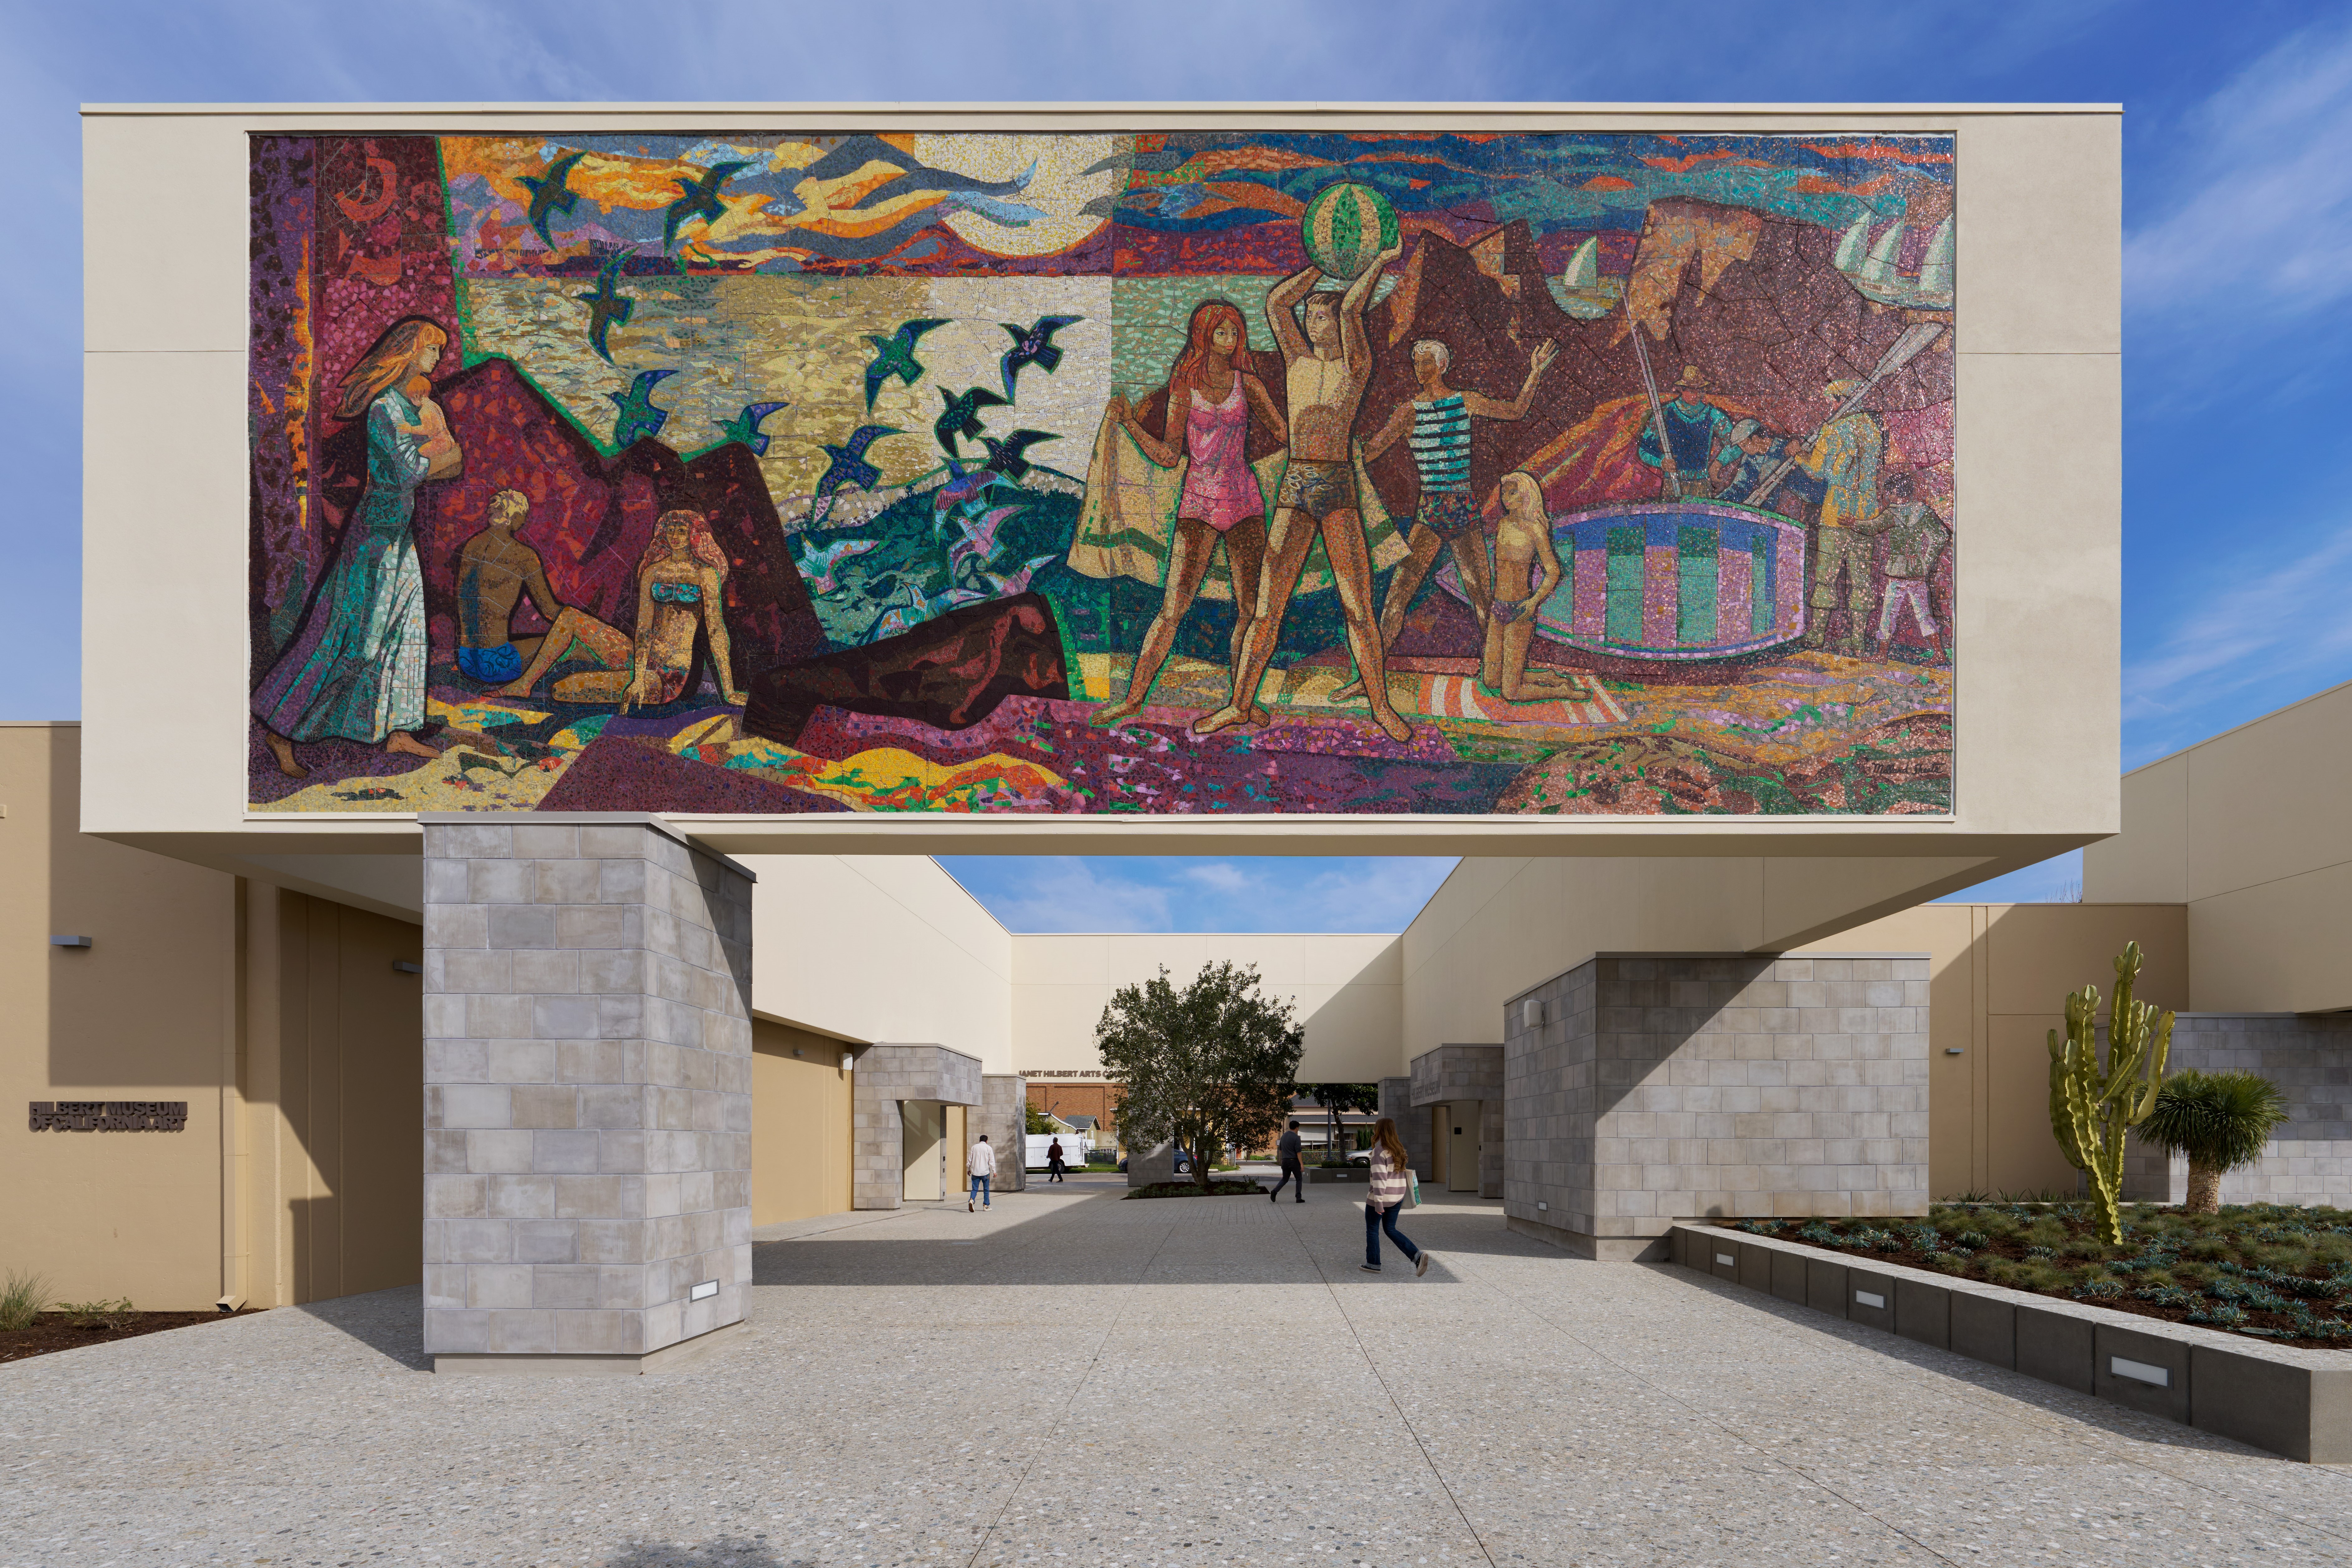 Hilbert Museum Facade Mosaic, "Pleasures Along the Beach" (1969)